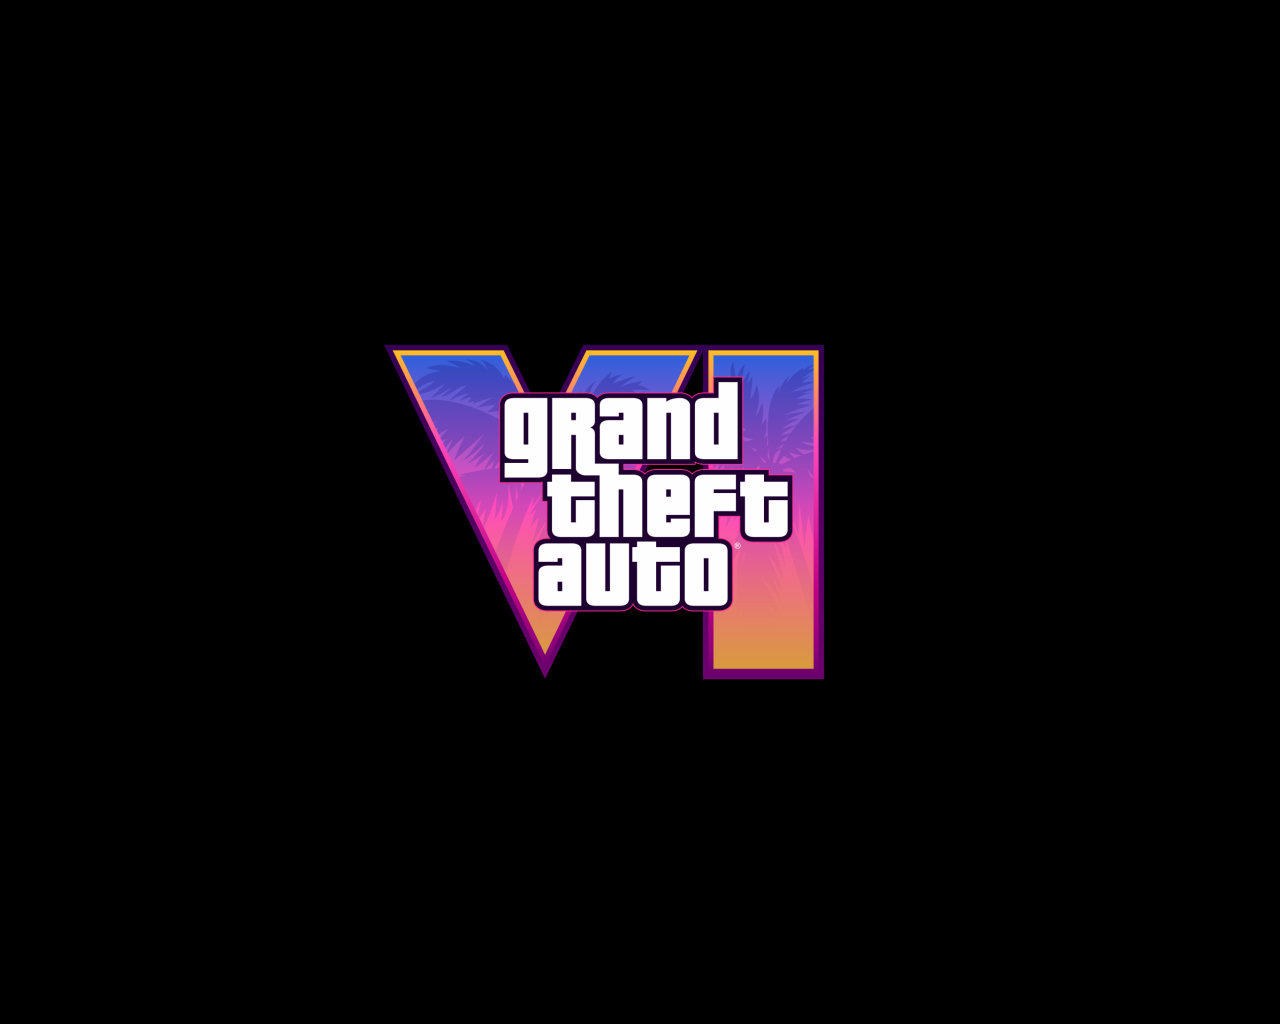 1280x1024 Resolution Grand Theft Auto Vi Logo 1280x1024 Resolution Wallpaper Wallpapers Den 7527